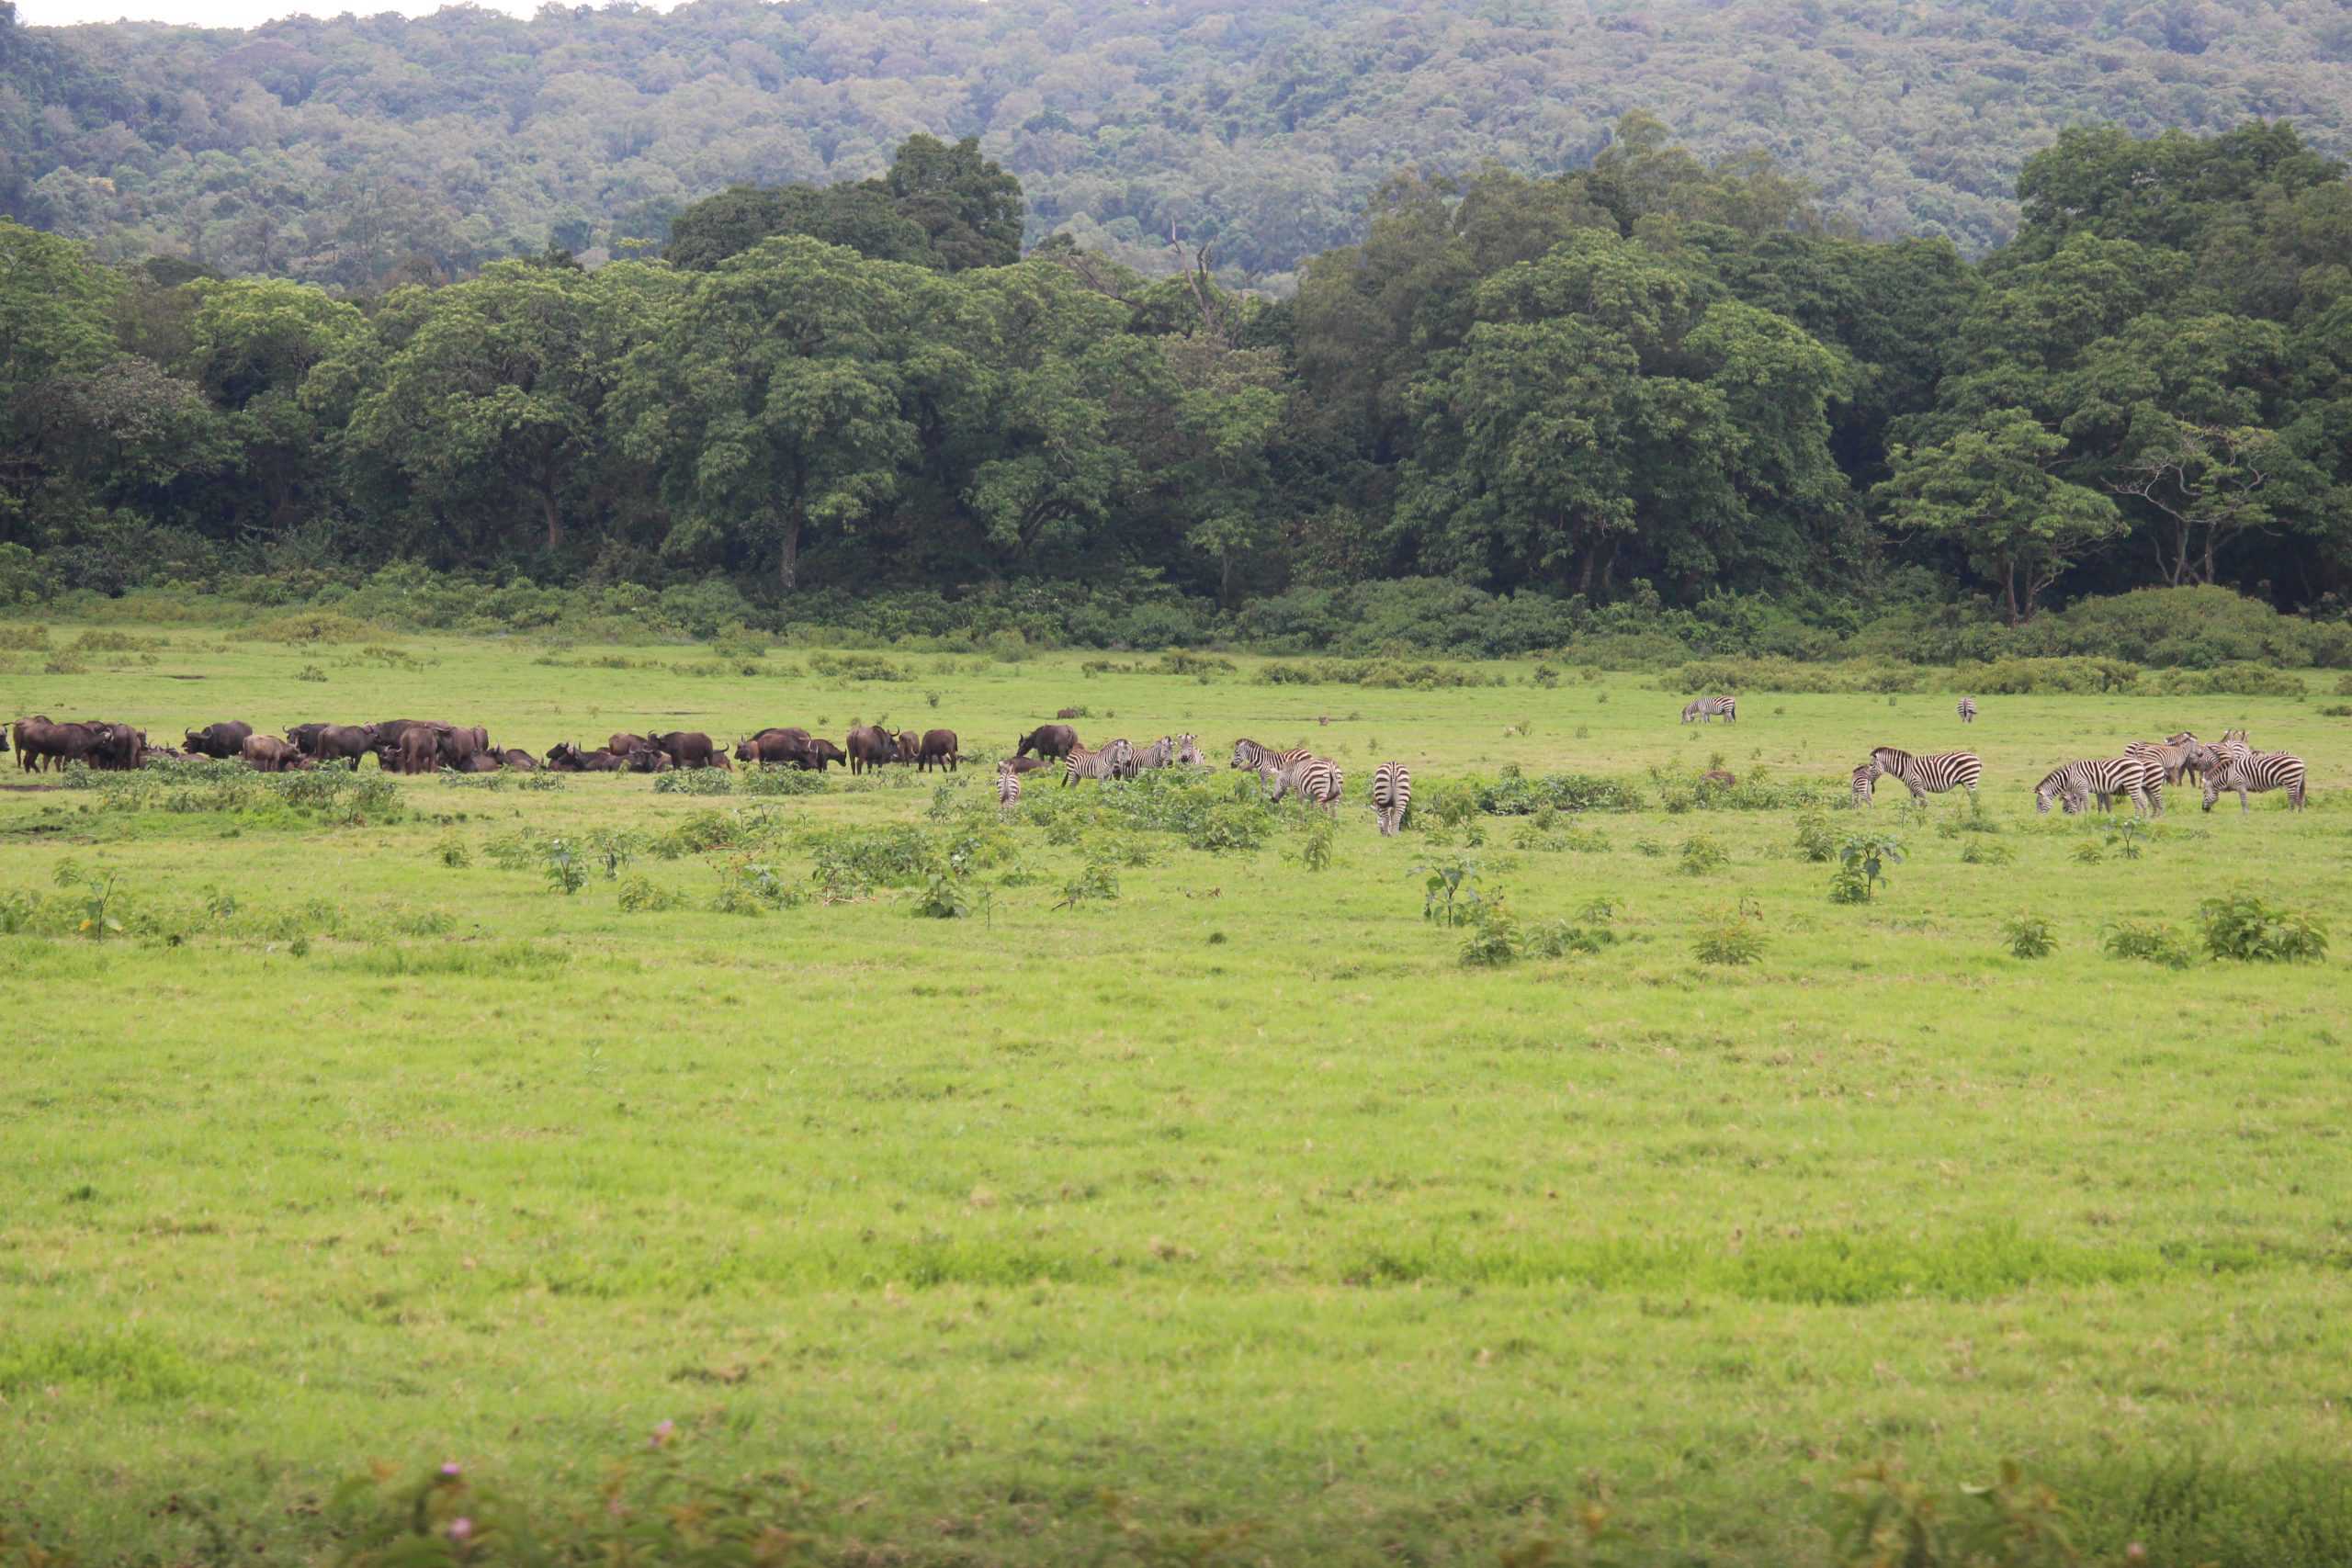 Vista in Arusha National Park